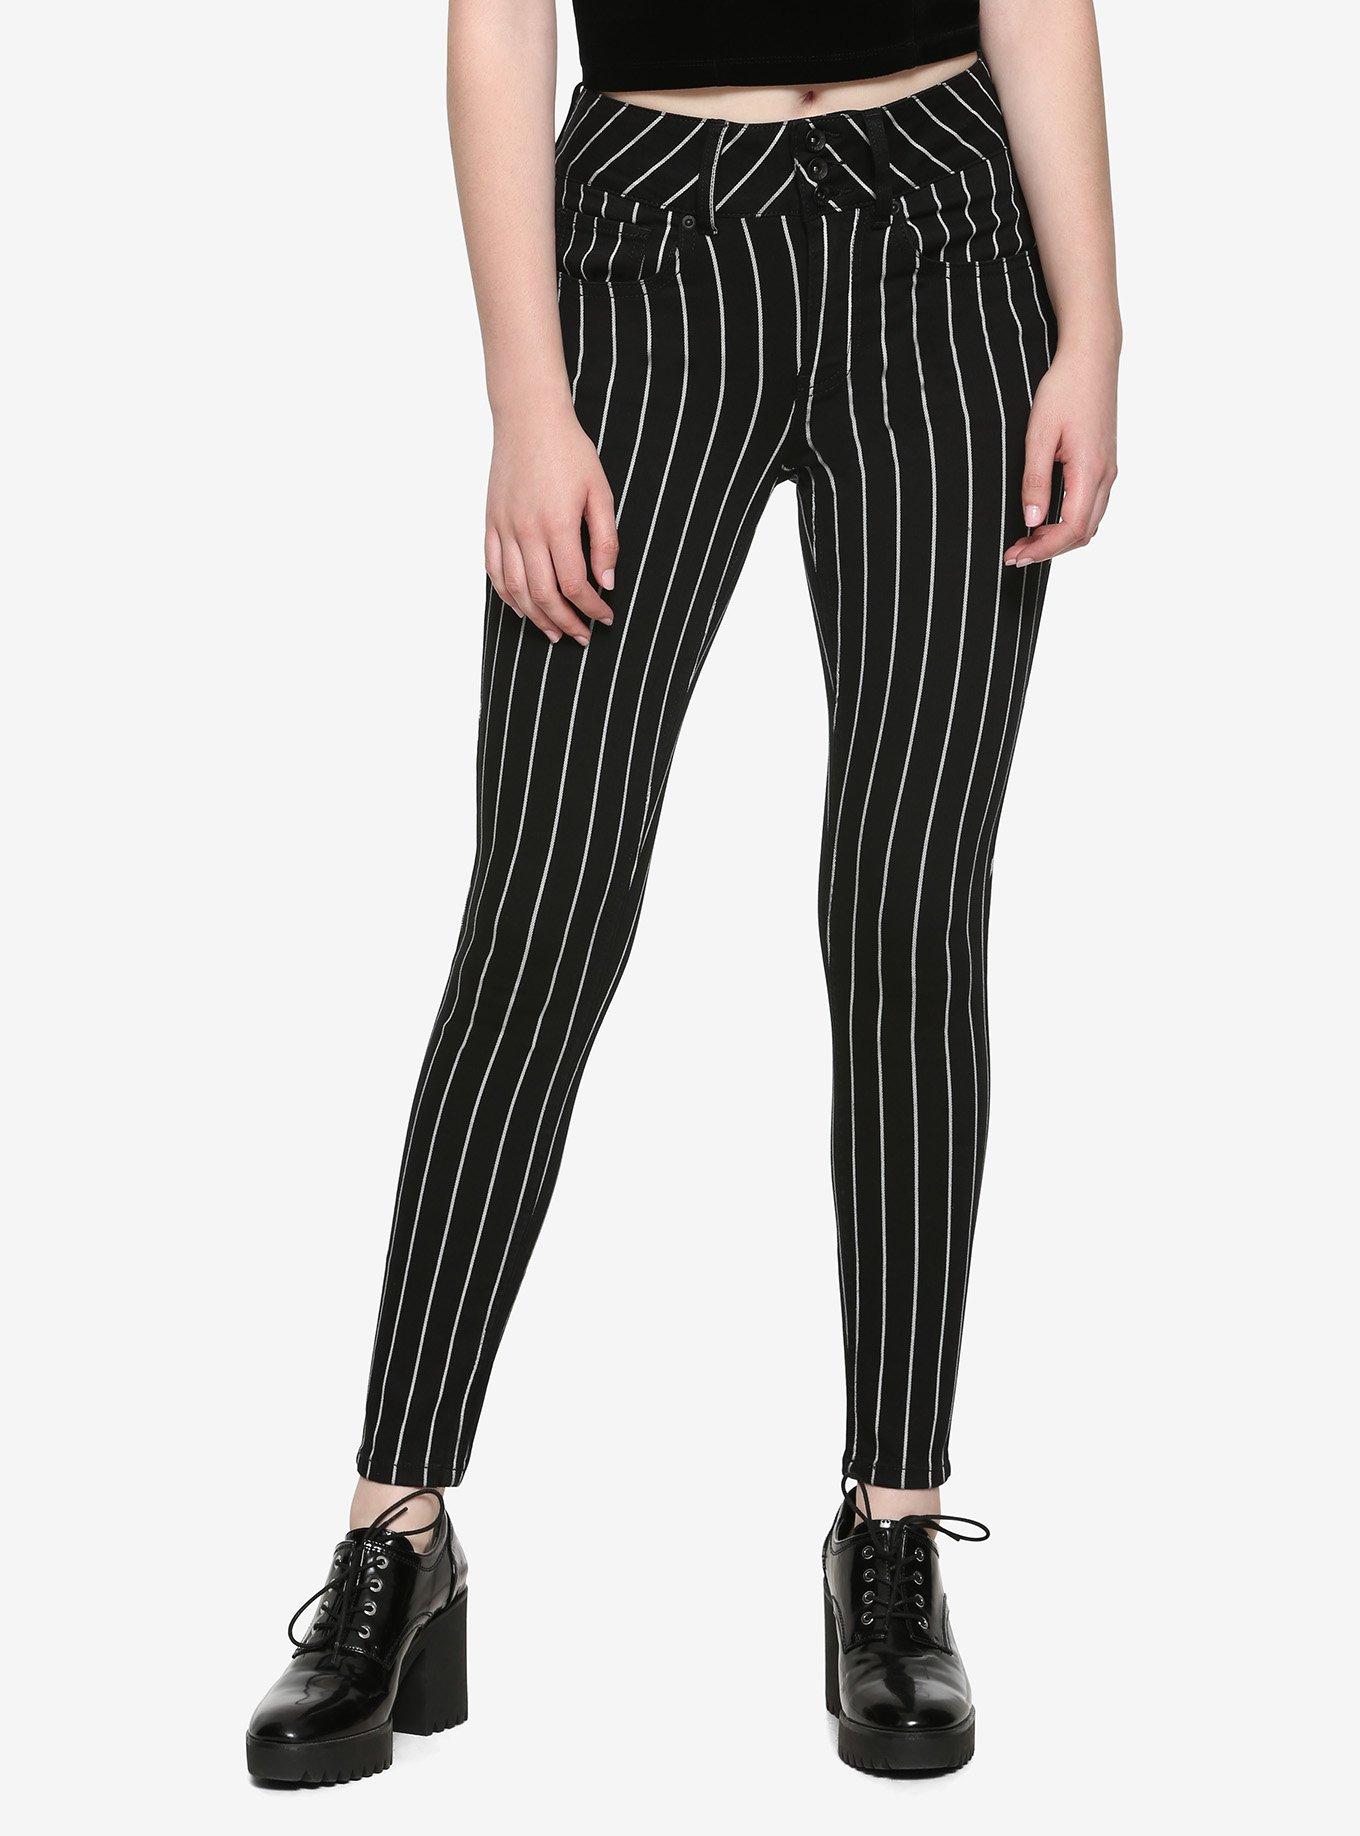 HT Black & White Pinstripe Super Skinny Jeans | Hot